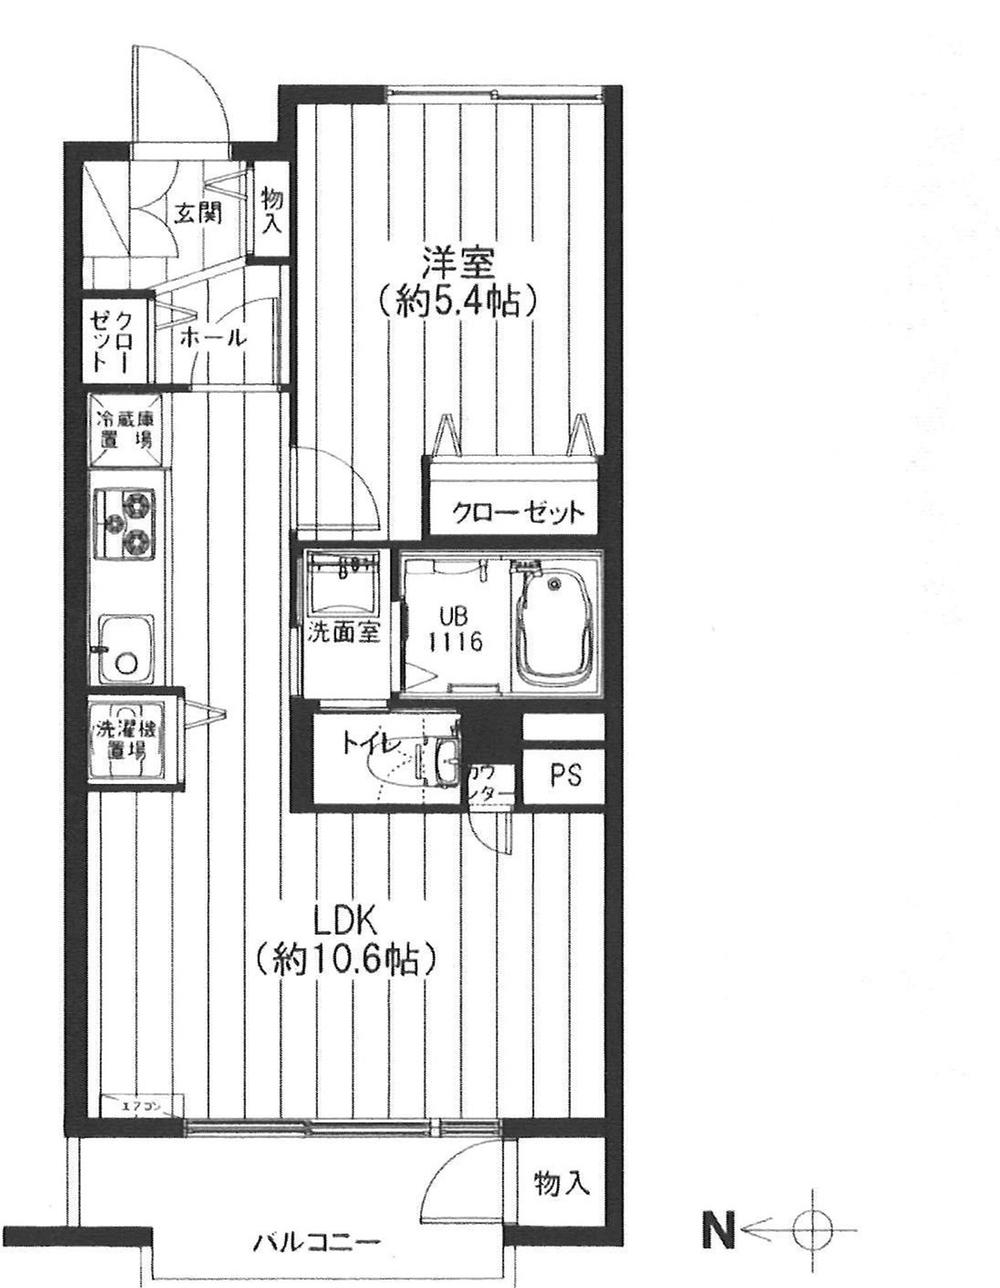 Floor plan. 1LDK, Price 21,990,000 yen, Occupied area 38.43 sq m , Full renovation of the balcony area 3.98 sq m functional 1LDK type ・ Mansion